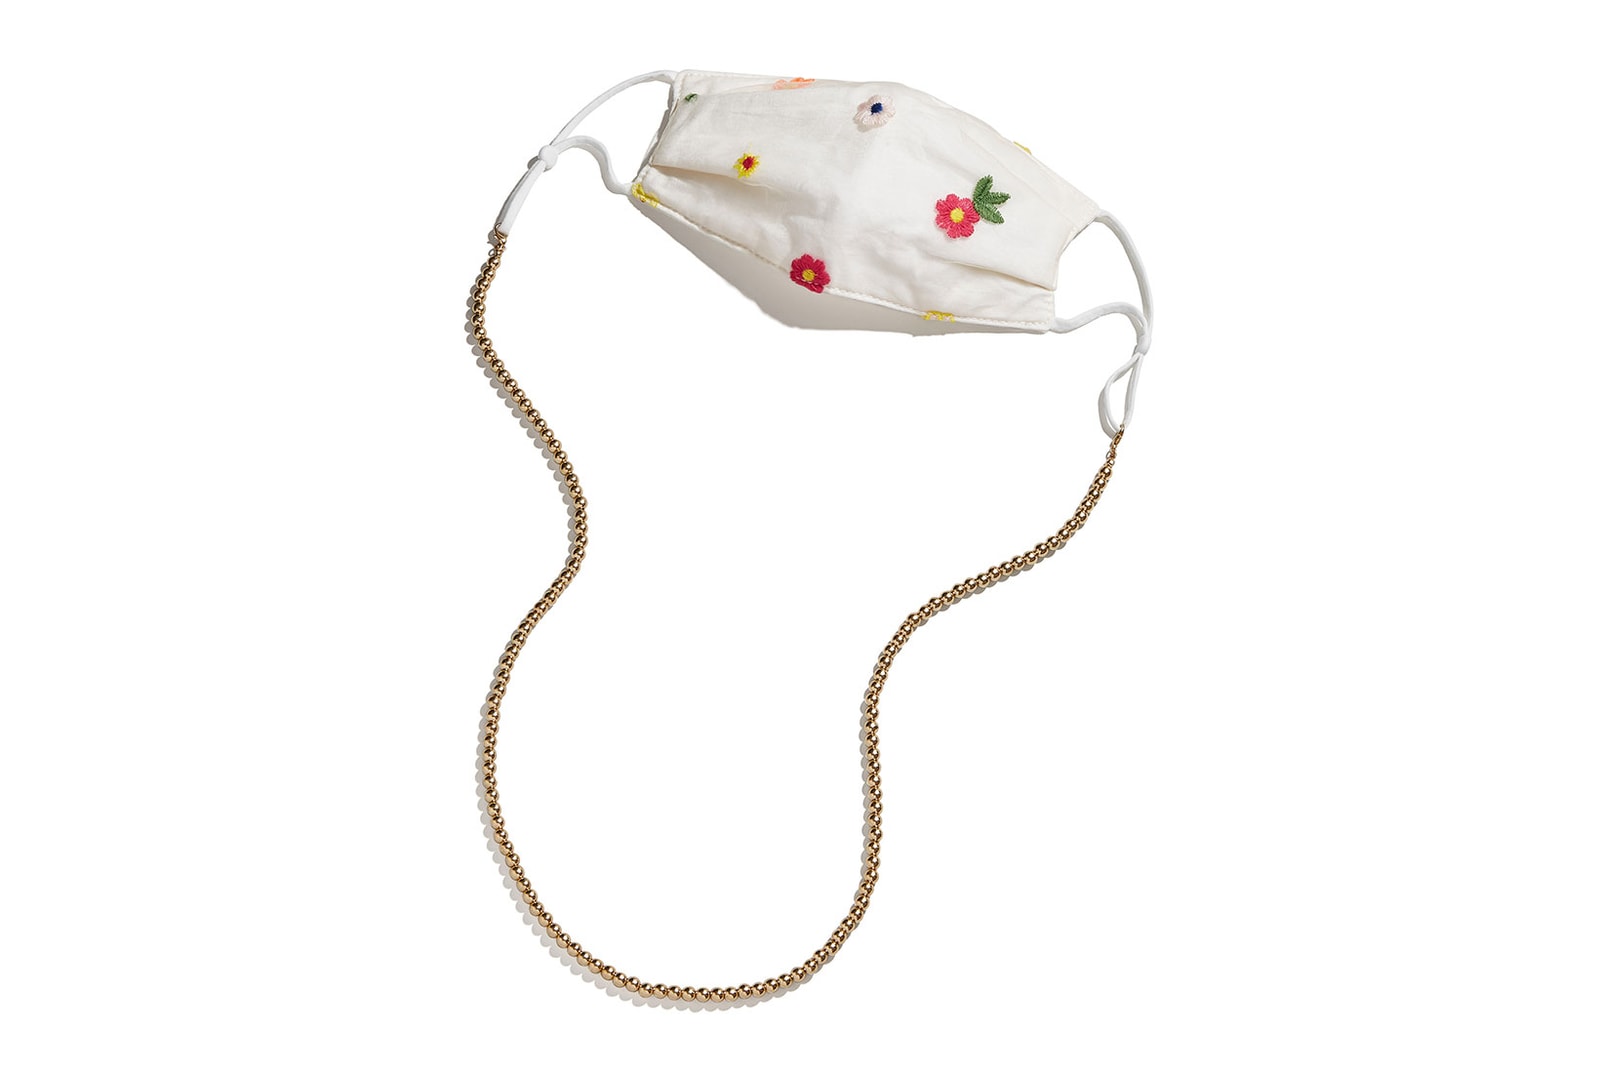 best mask chains straps holders beads pearls accessories sundae school gelareh mizrahi eliou covid19 coronavirus